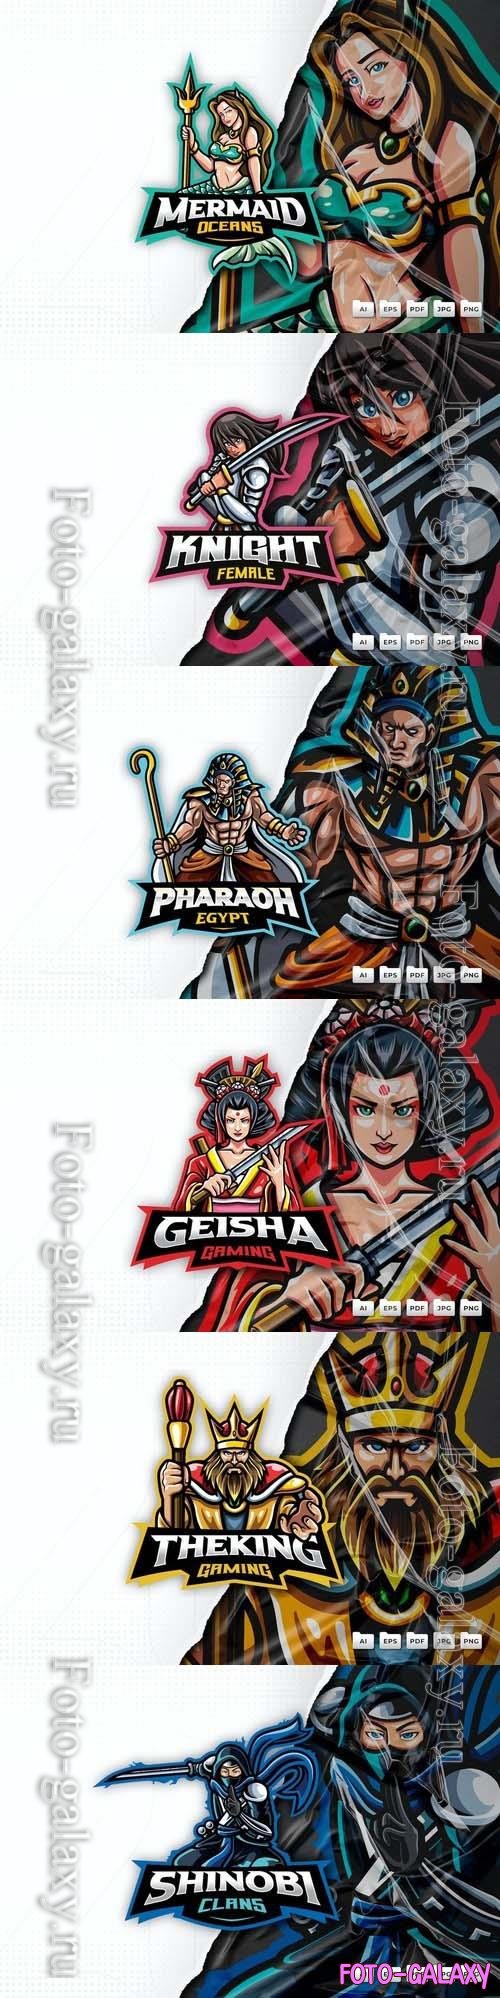 King, shinobi, pharaoh, mermaid, geisha, female knight, mascot logo design